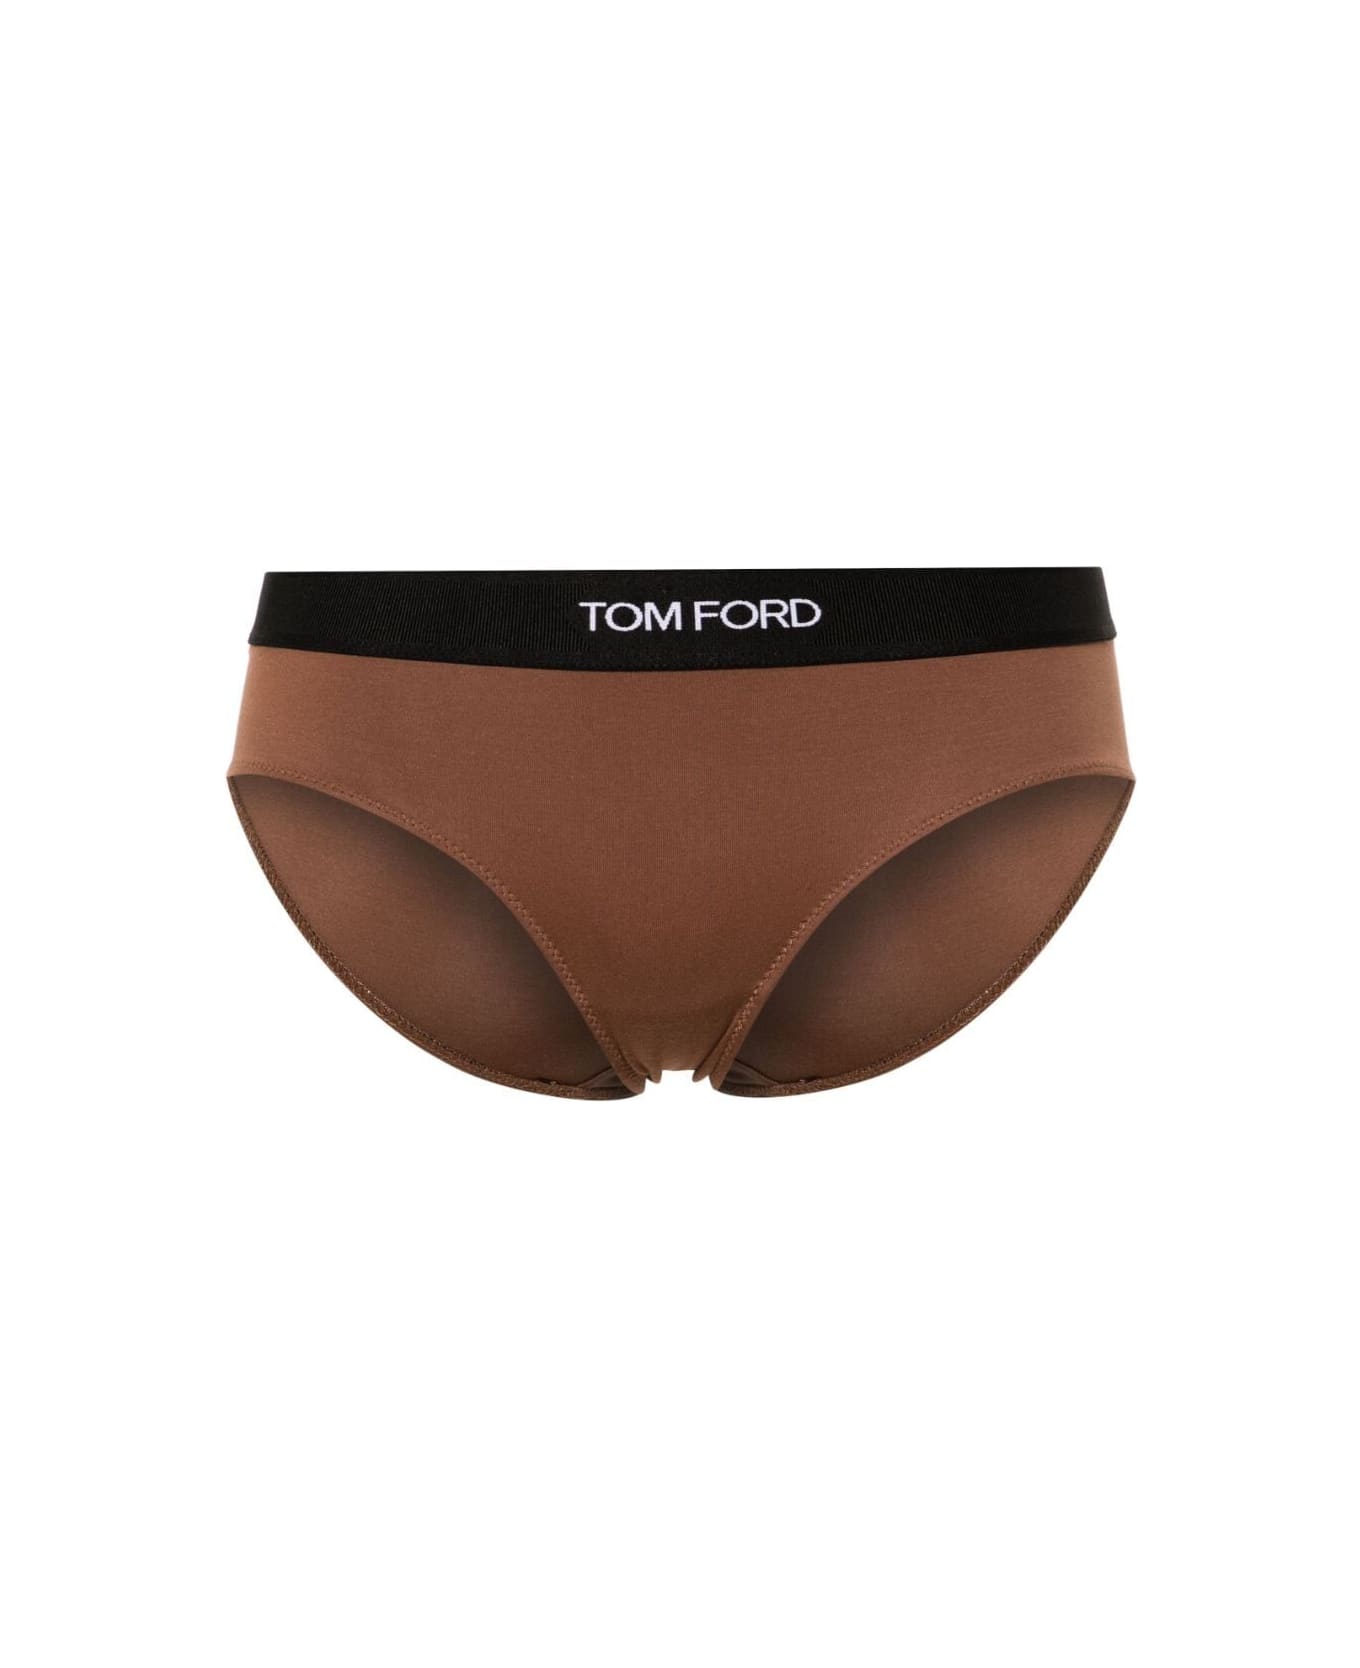 Tom Ford Modal Signature Boy Shorts - Cocoa Brown ショーツ